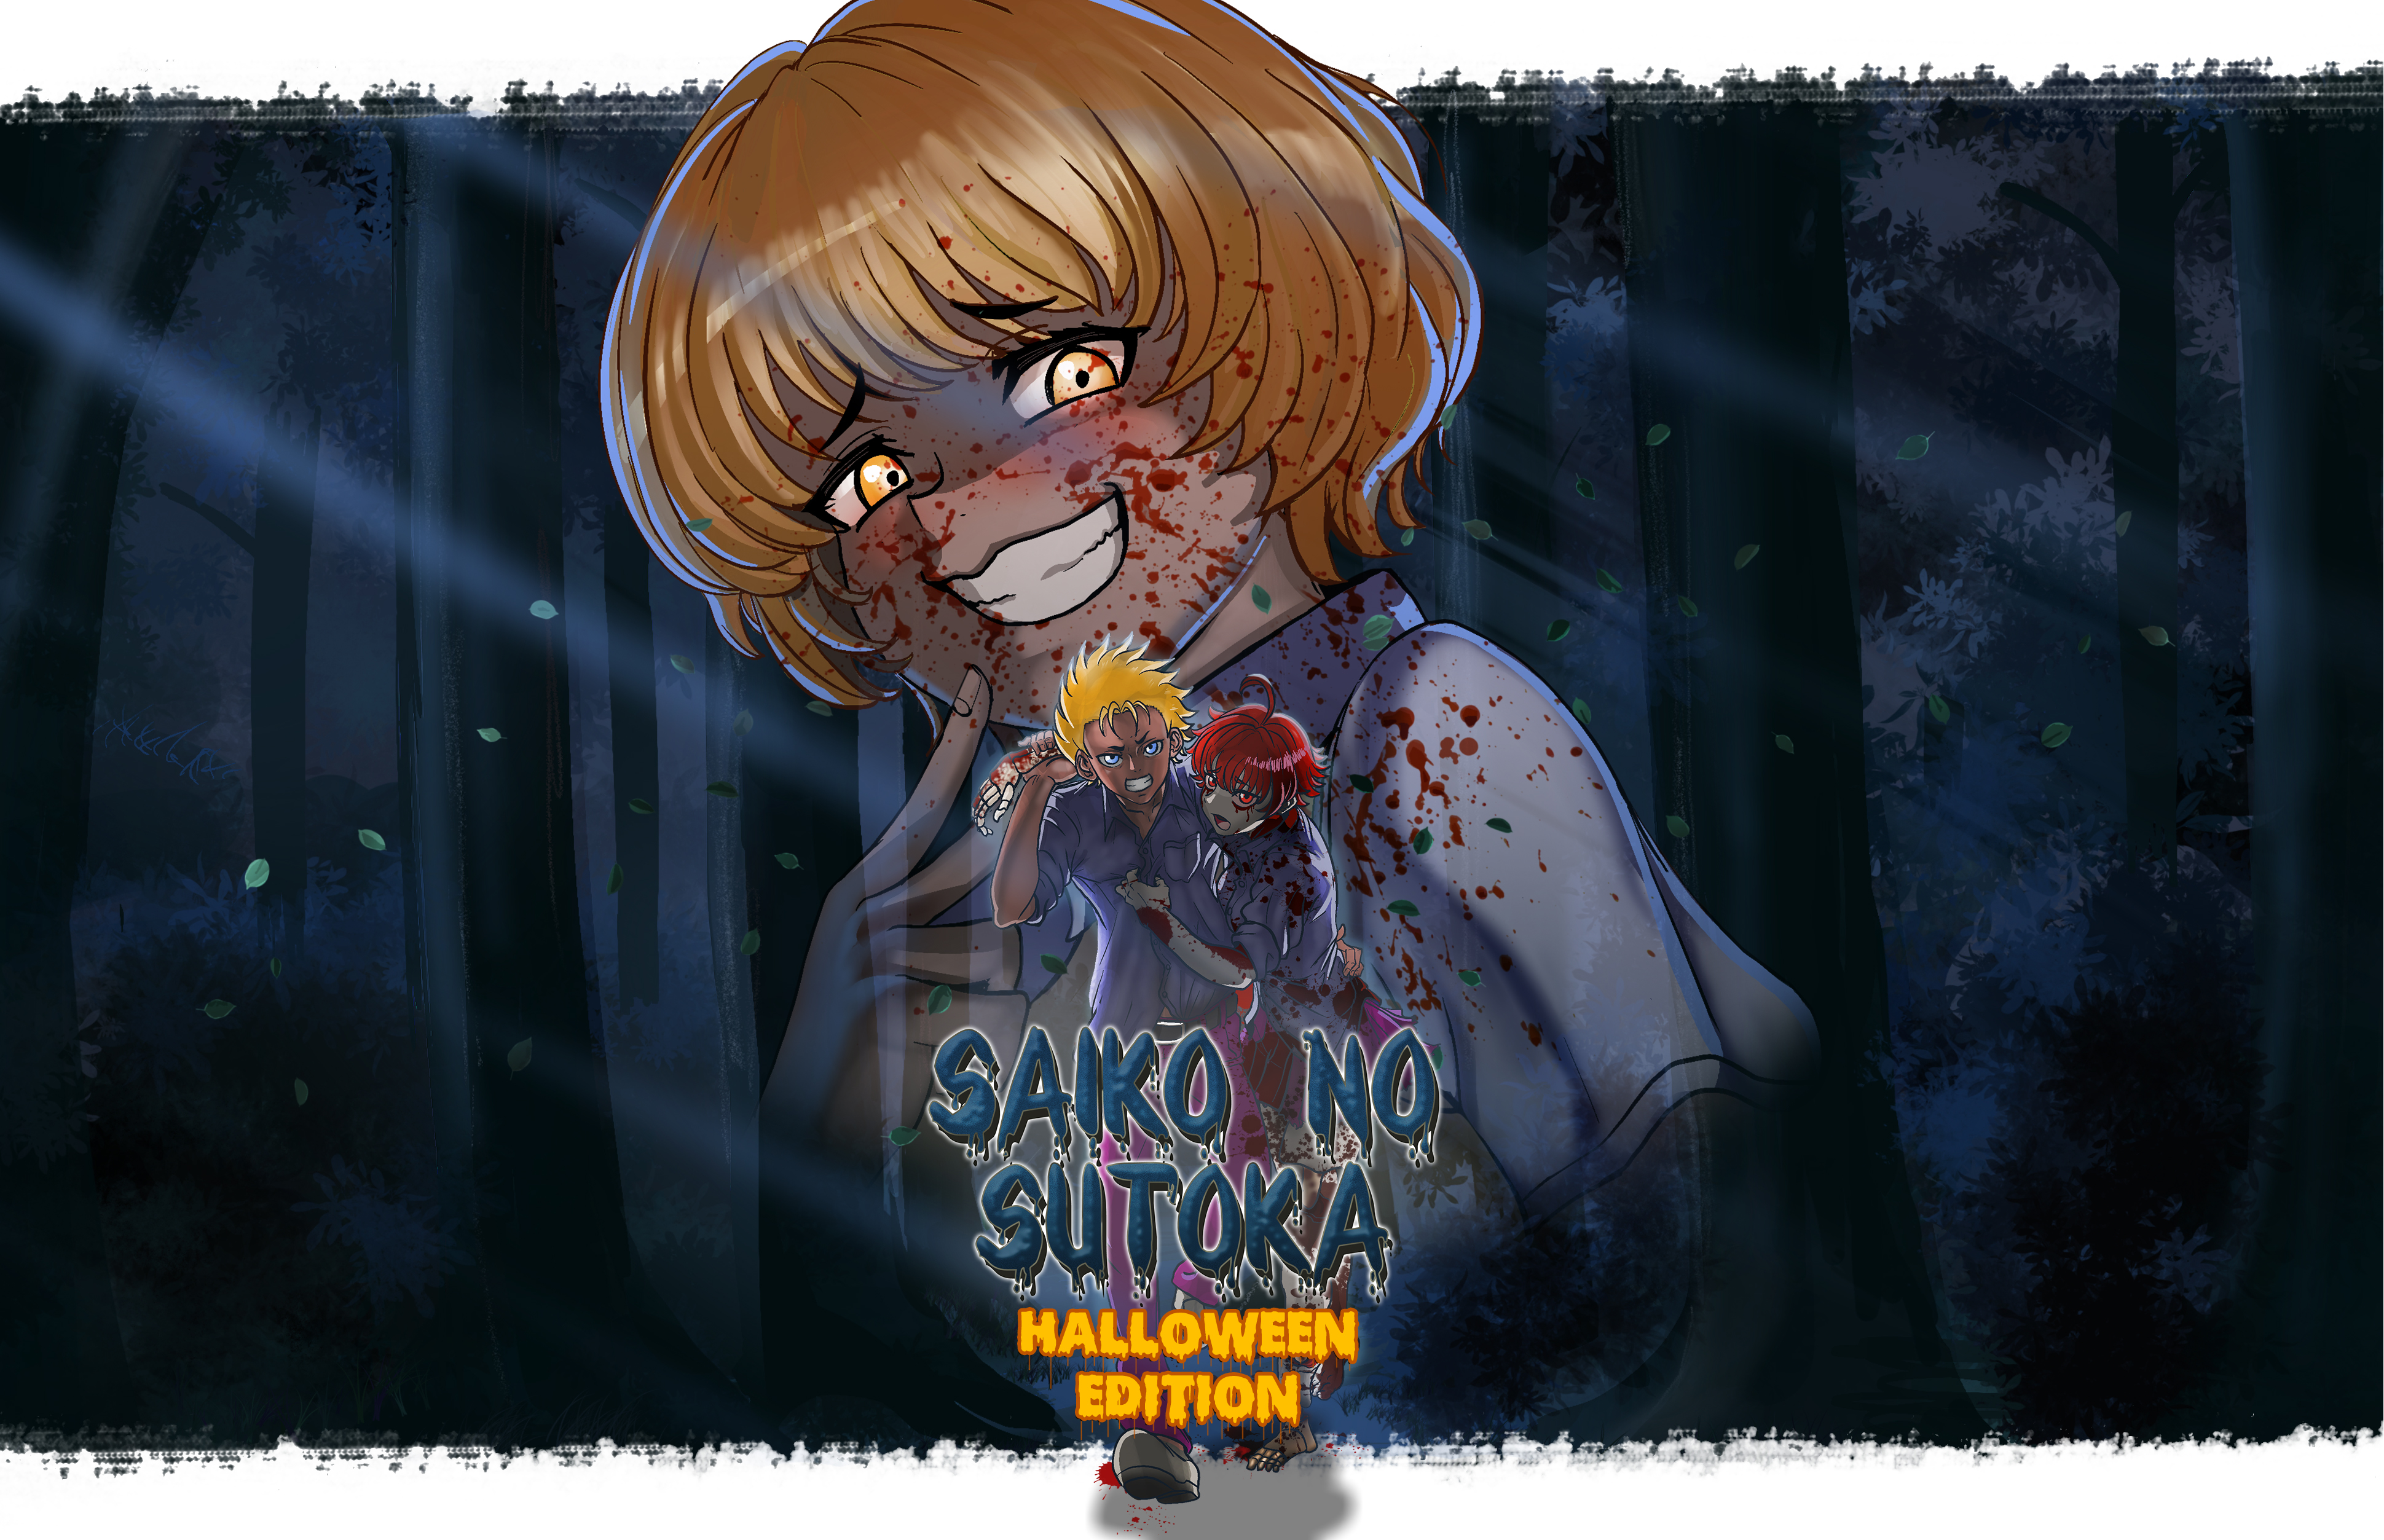 Saiko no Sutoka by habupain